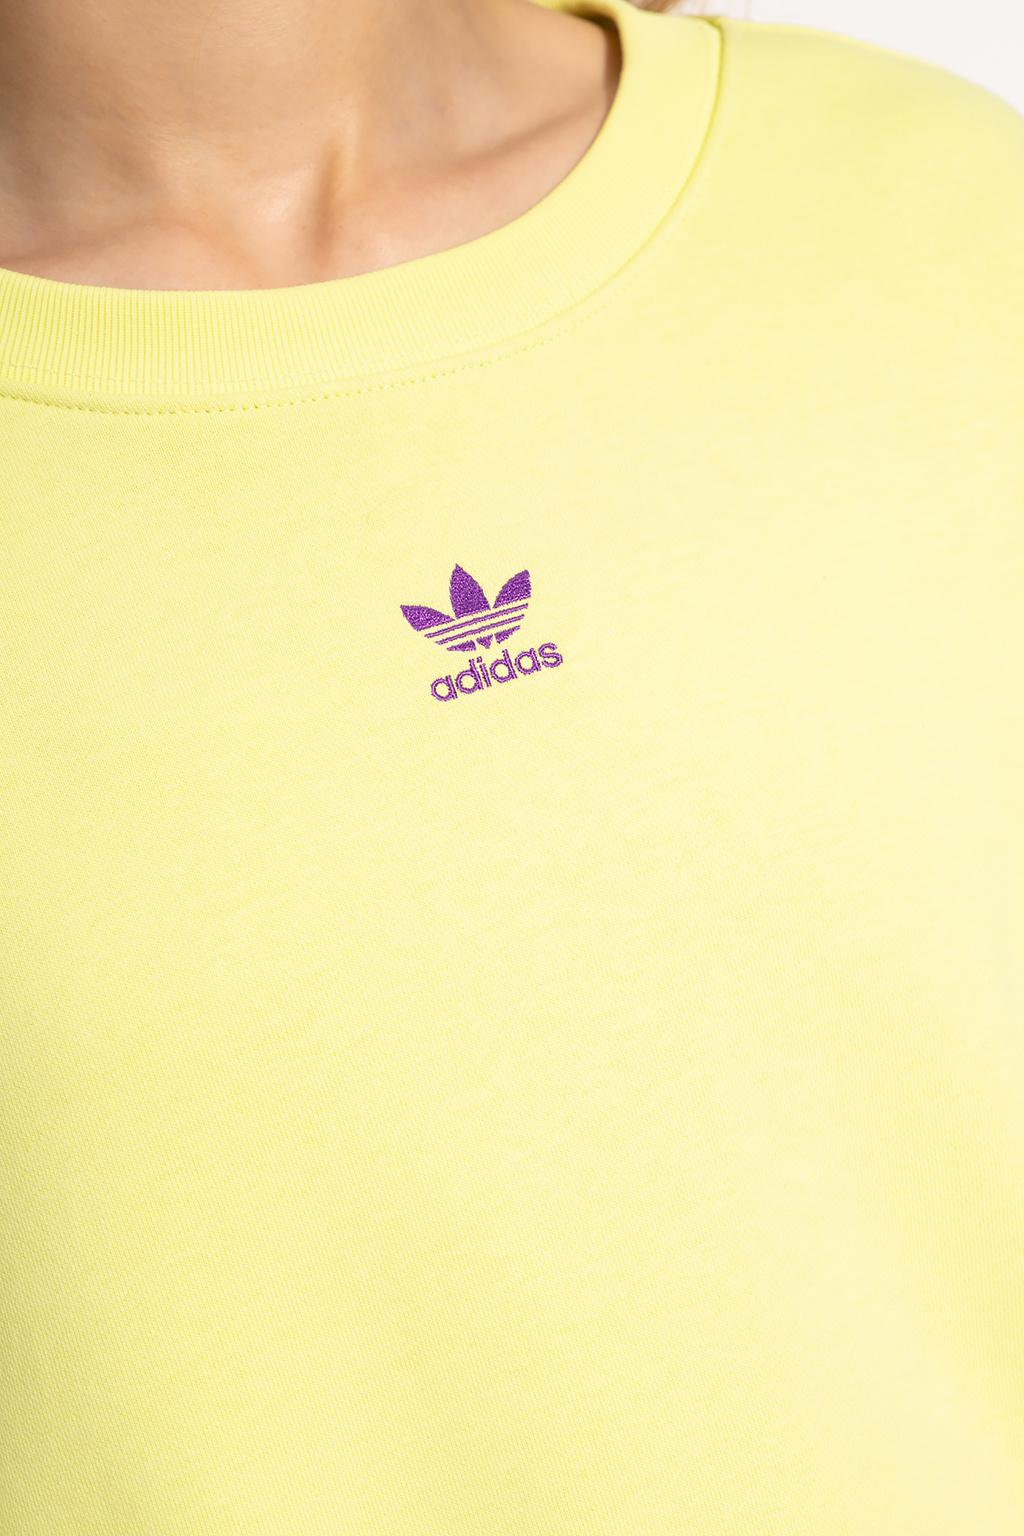 adidas Originals Sweatshirt With Logo in Yellow | Lyst